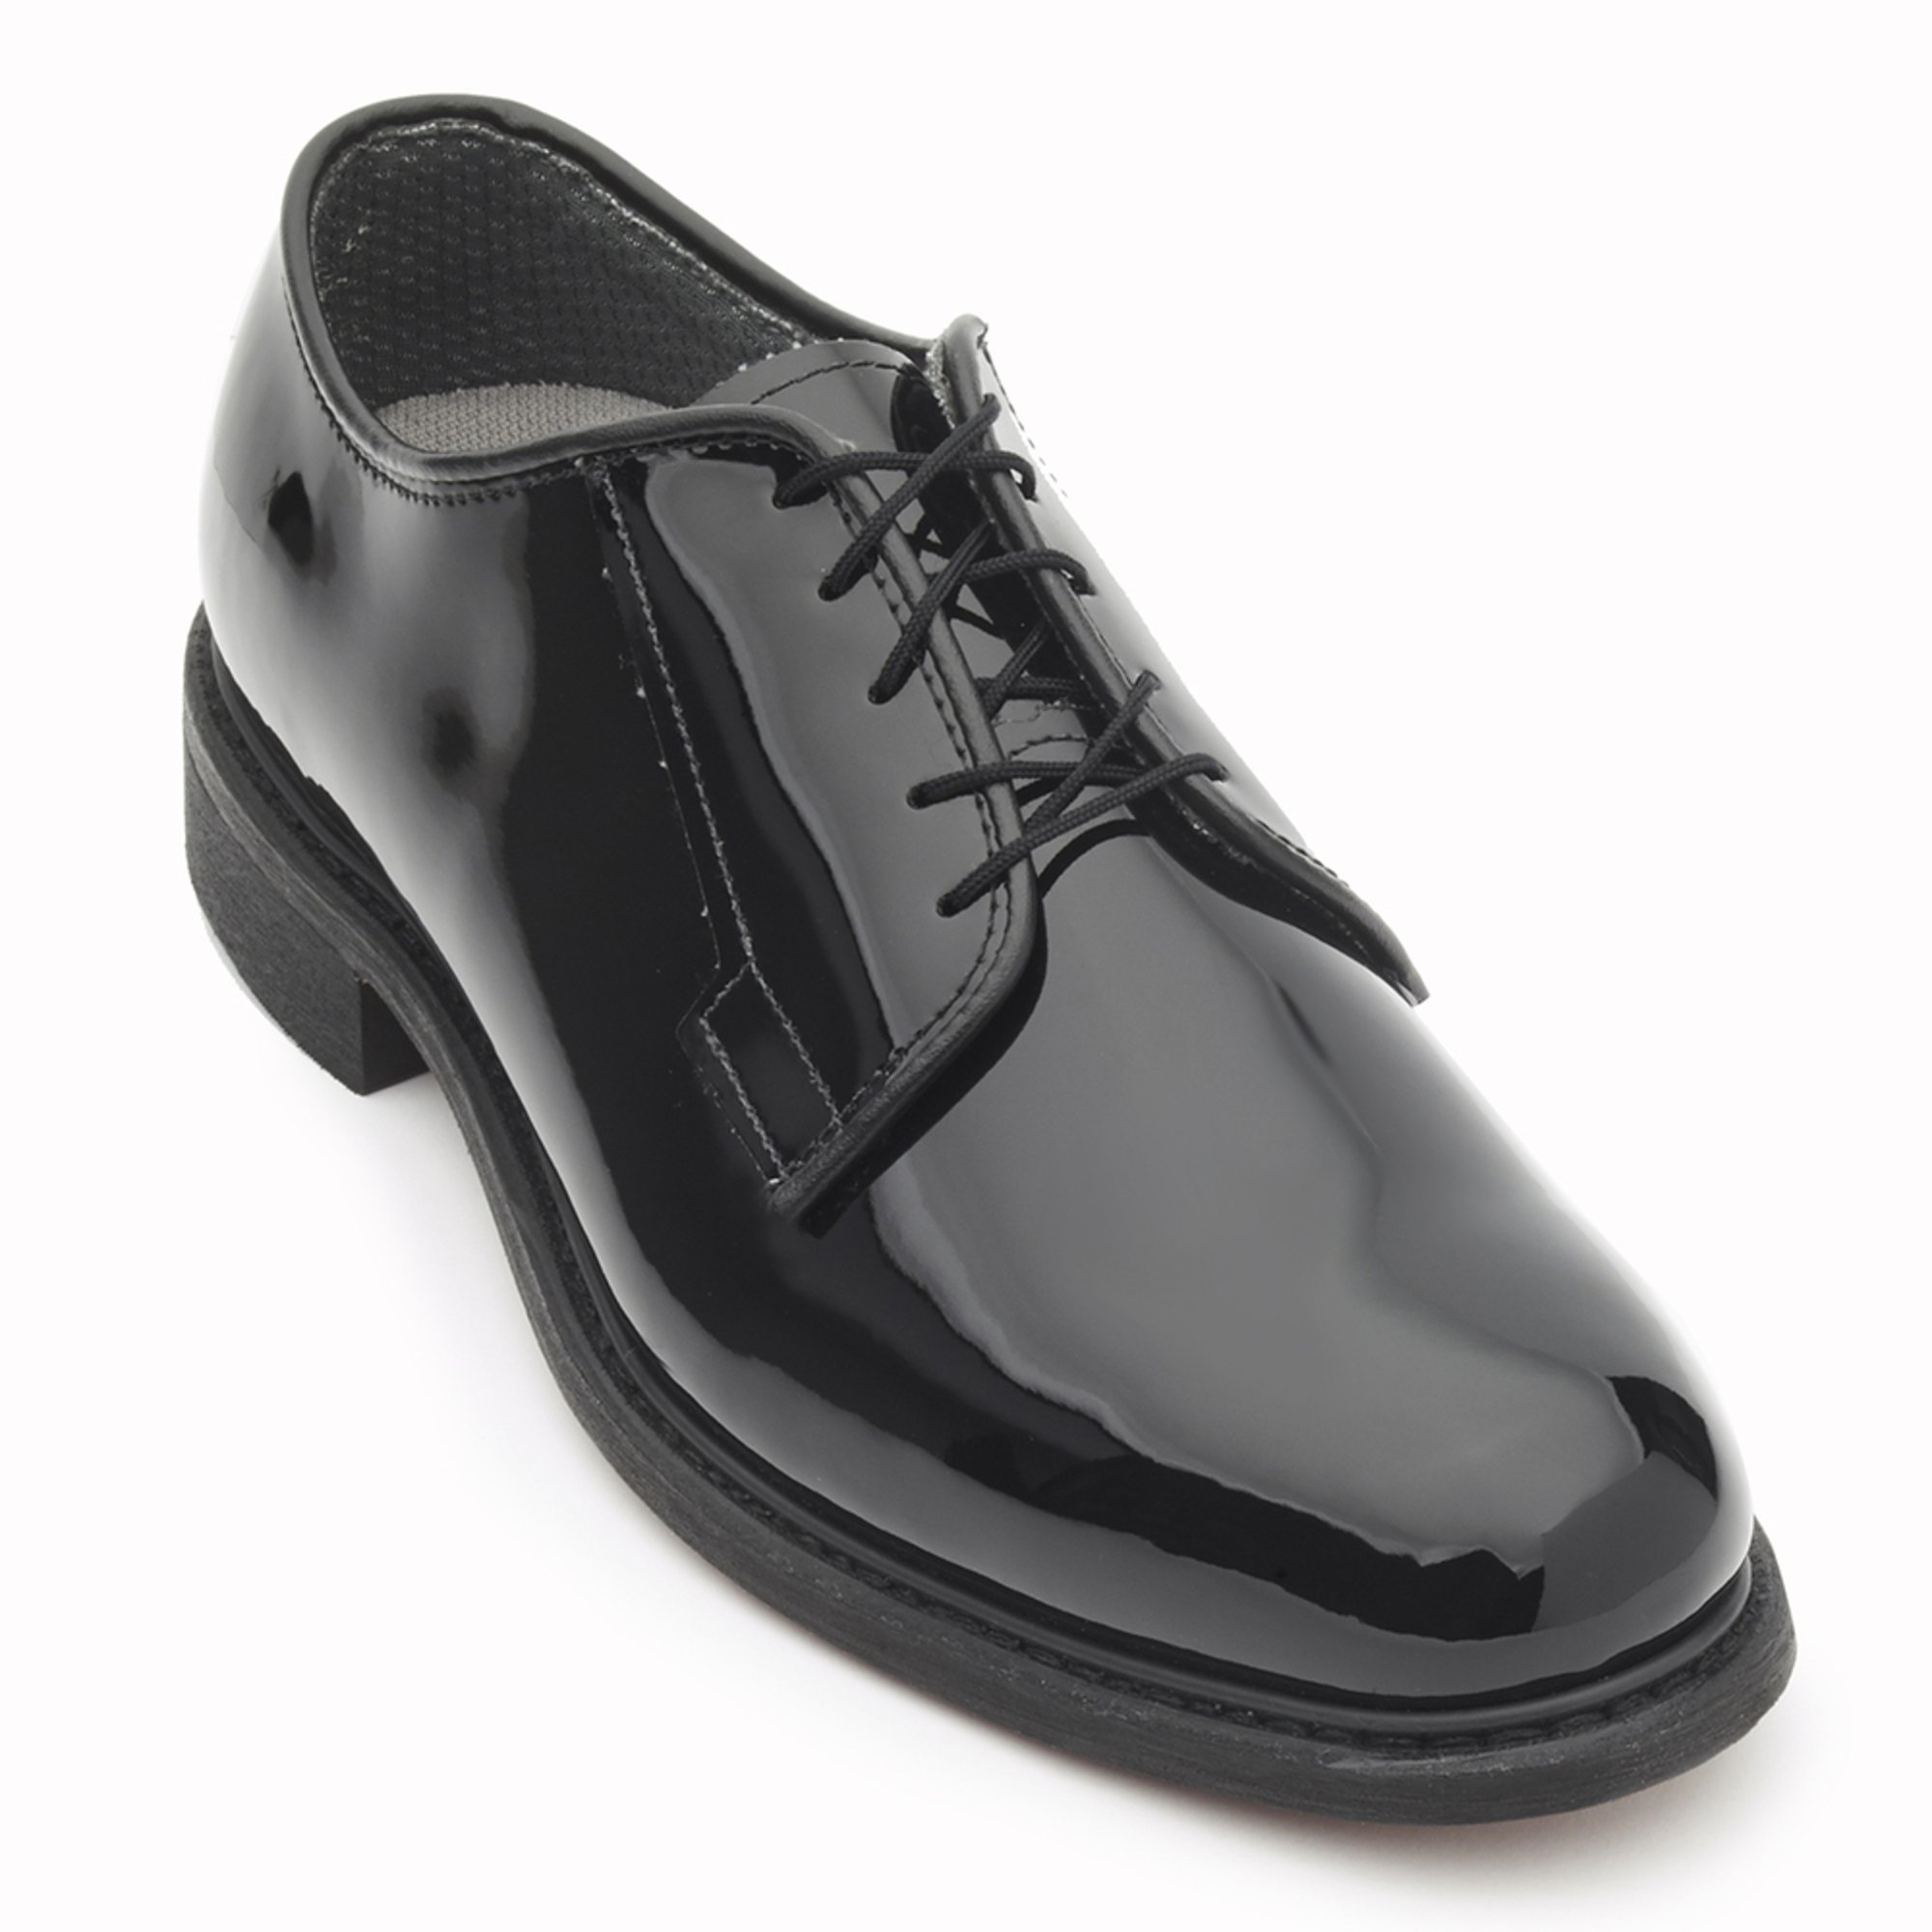 mens black dress shoes leather sole